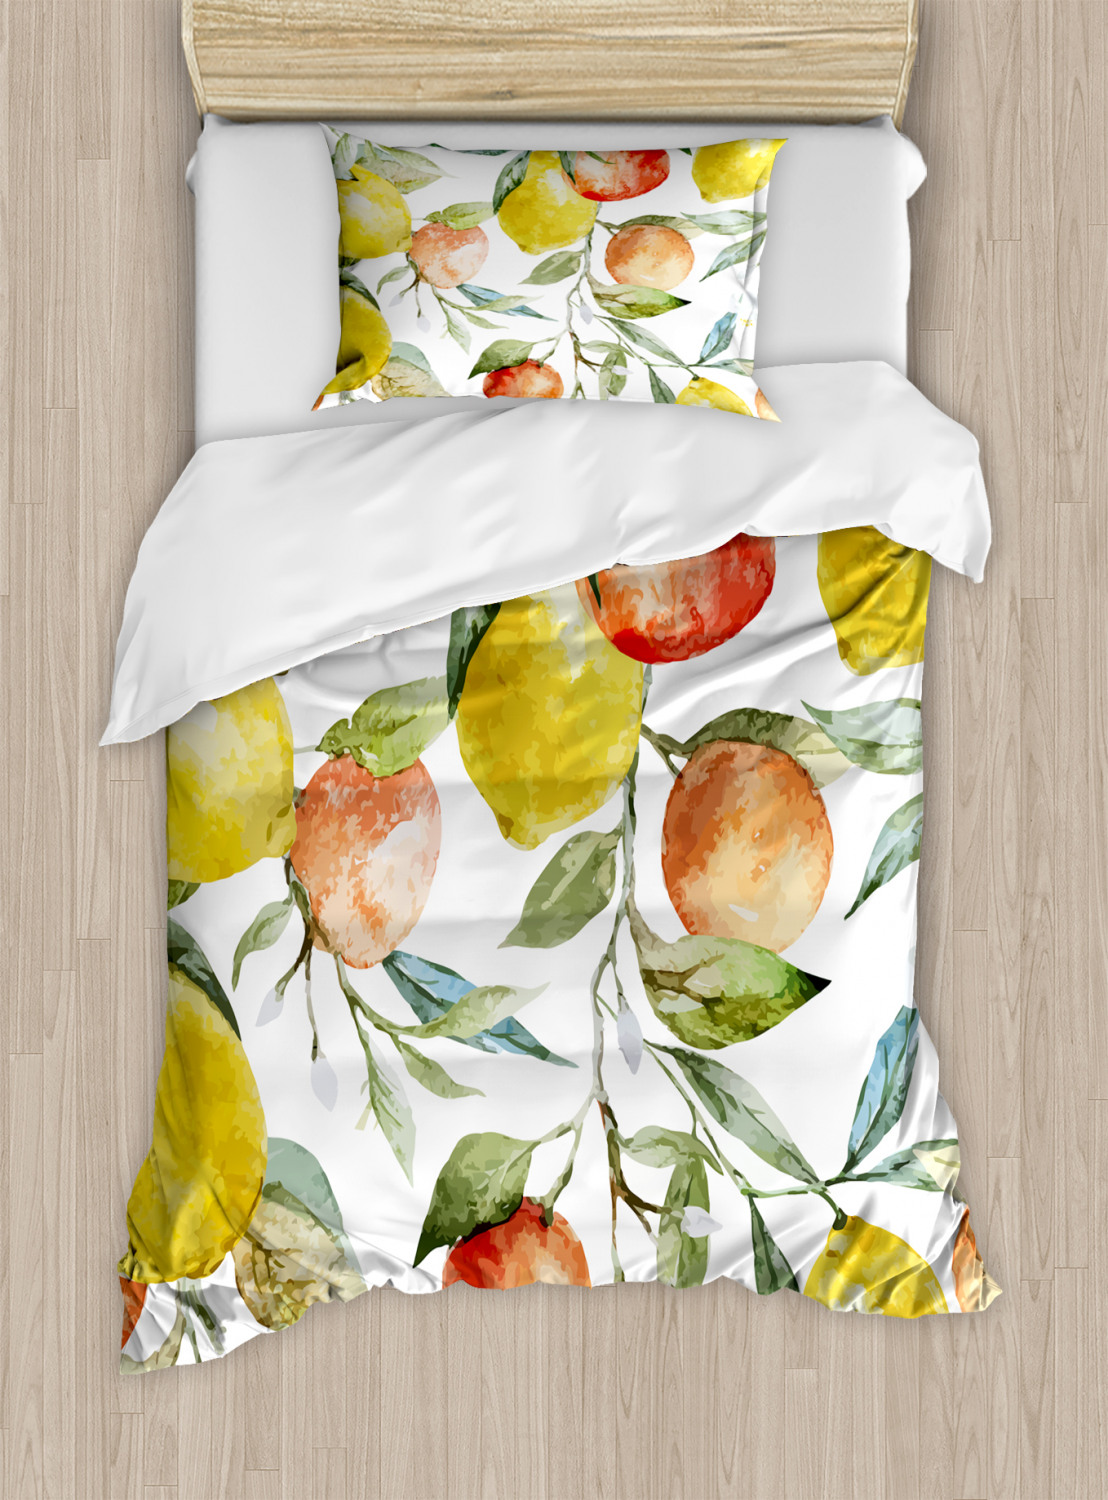 Summer Lemon Duvet Cover Set Twin Queen King Sizes with Pillow Shams 